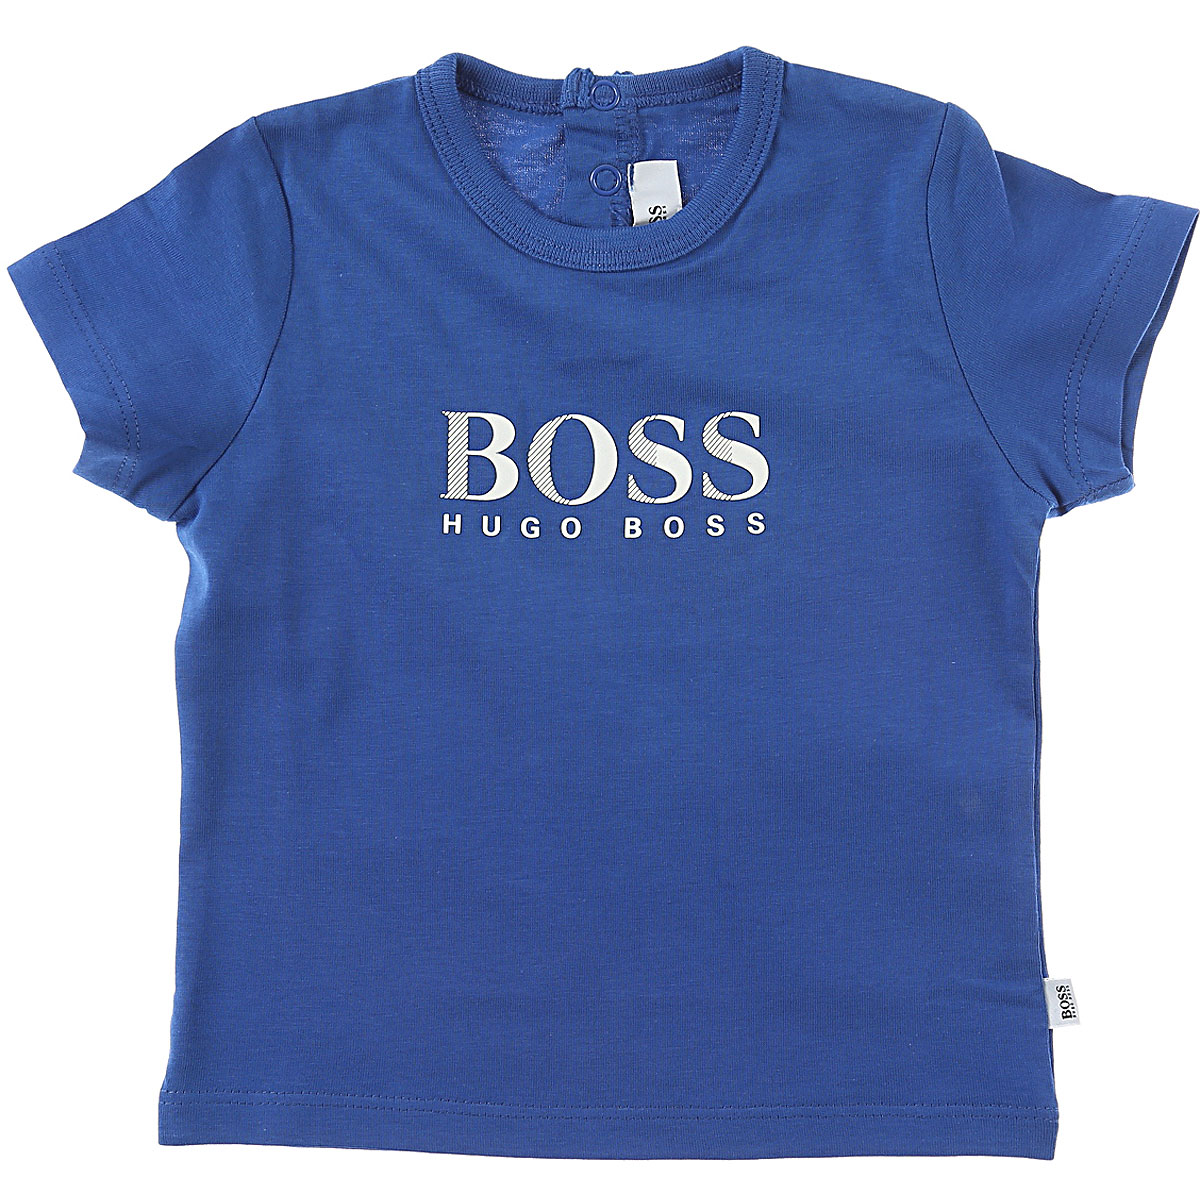 Baby Boy Clothing Hugo Boss, Style code: j05672-871-